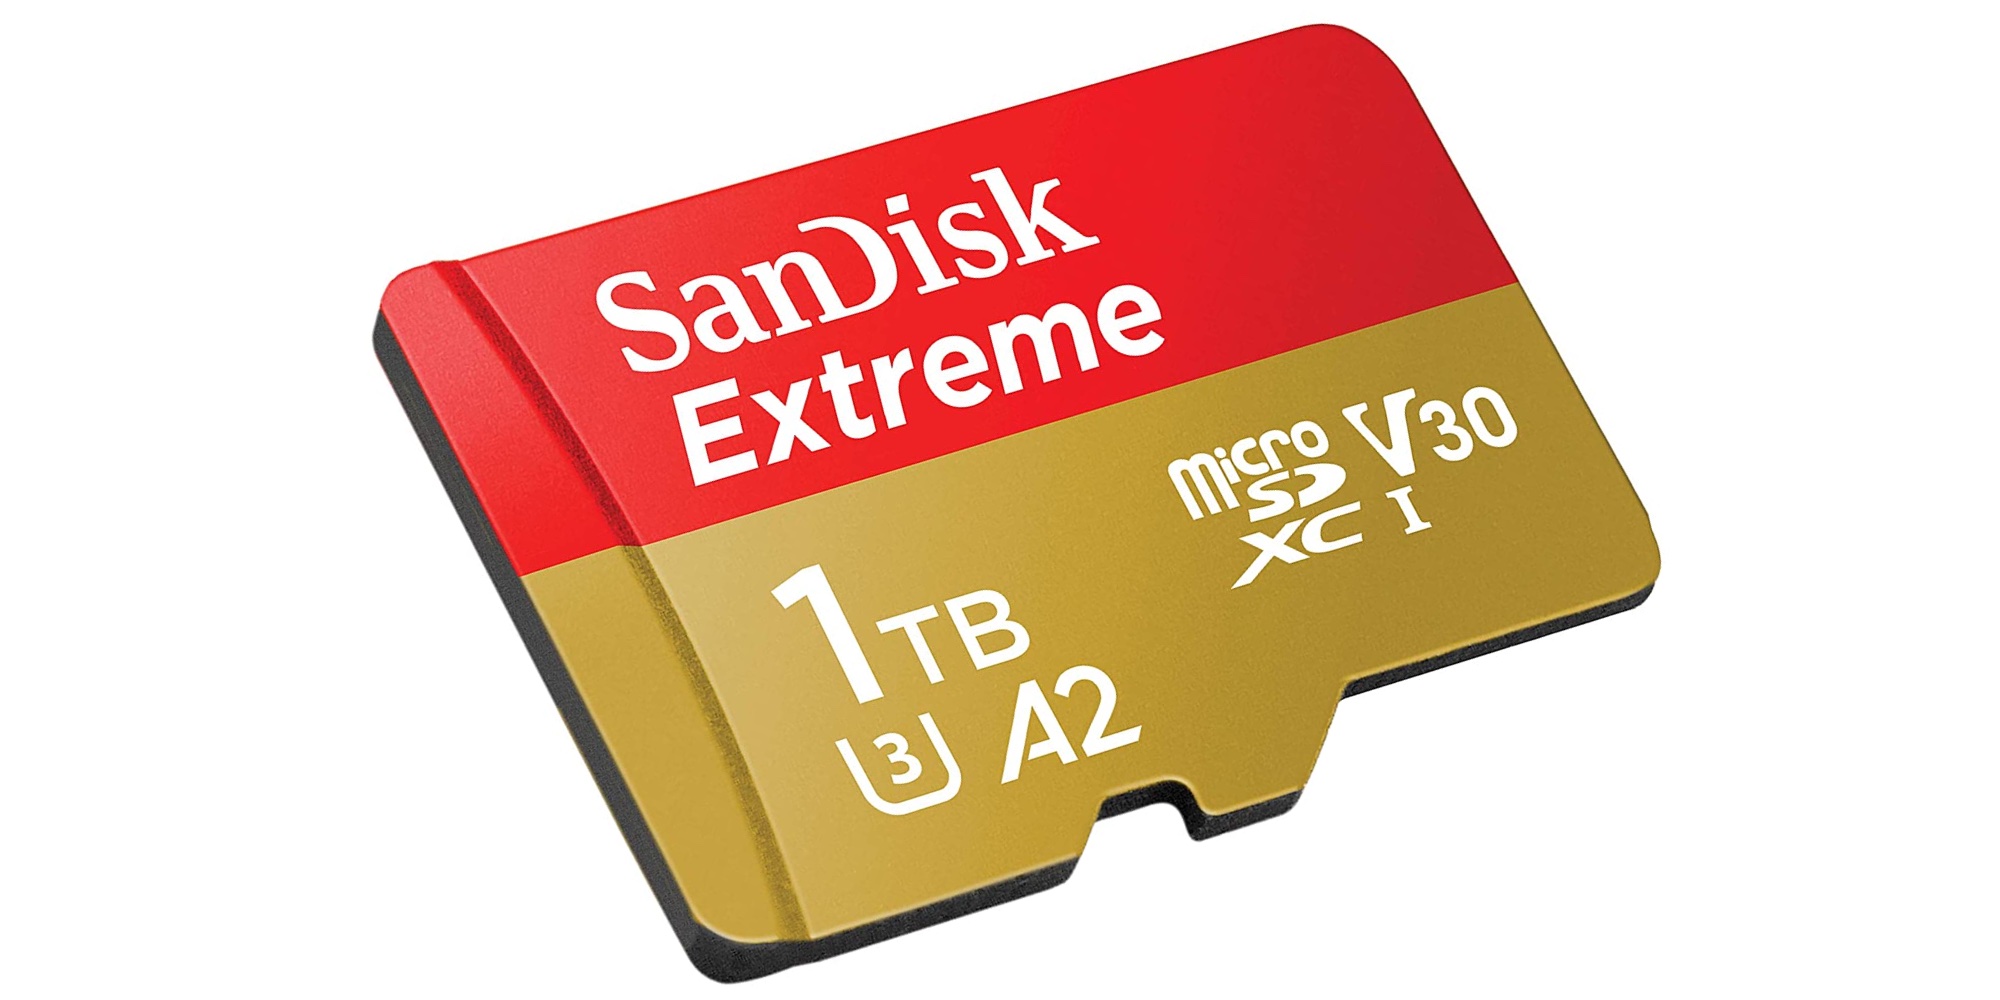 Ward Latin yarn Grab 1TB of SanDisk Extreme microSD card storage at an Amazon low of $160  (Save 20%)